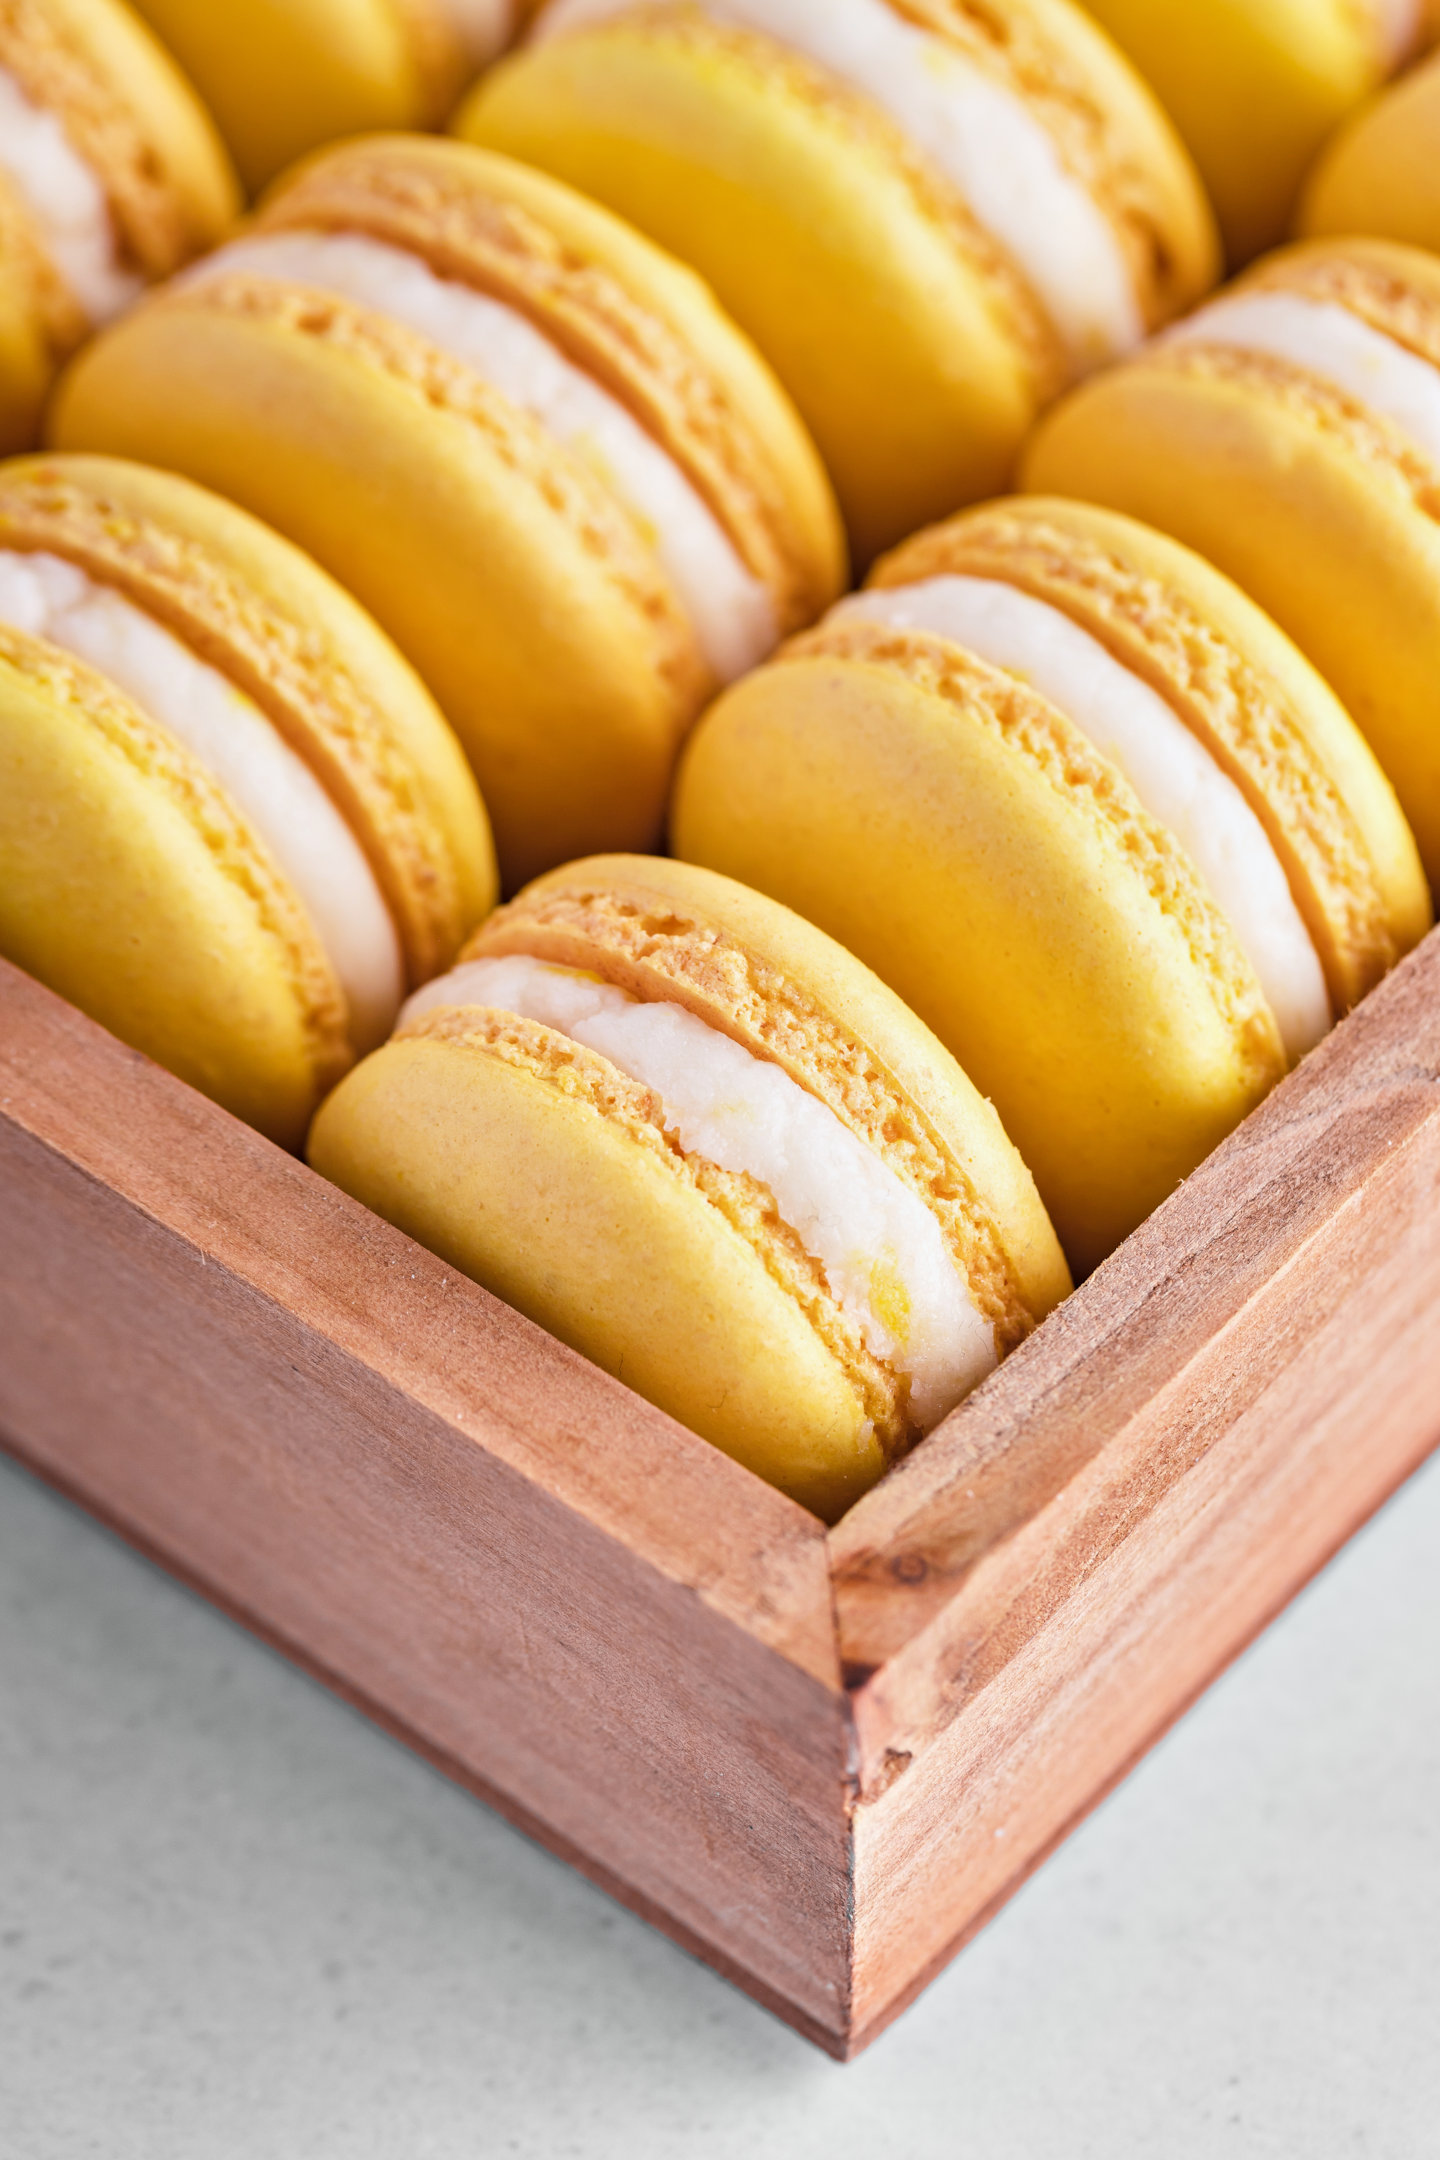 lemon macarons in a wooden box